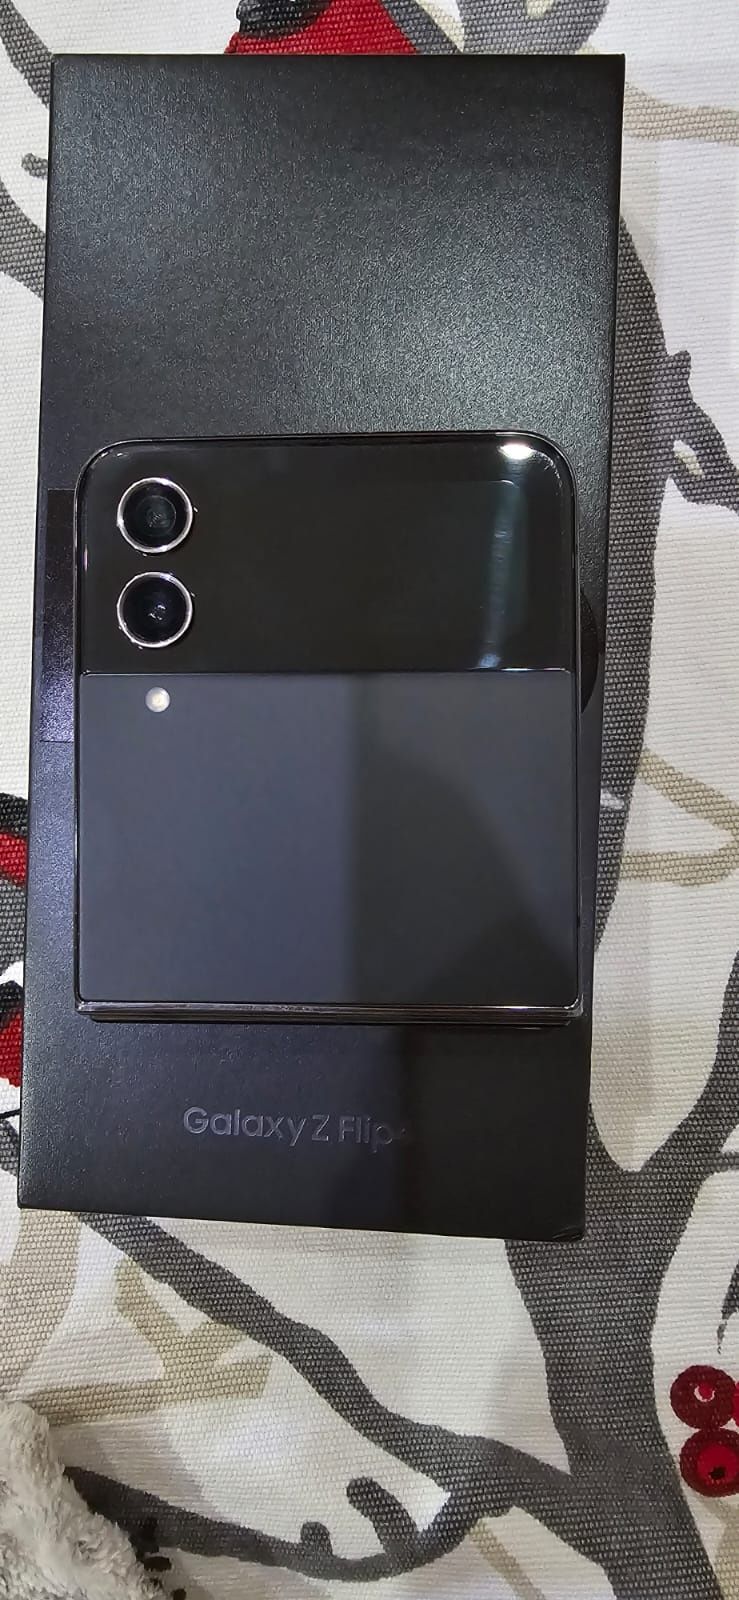 Samsung z flip 4